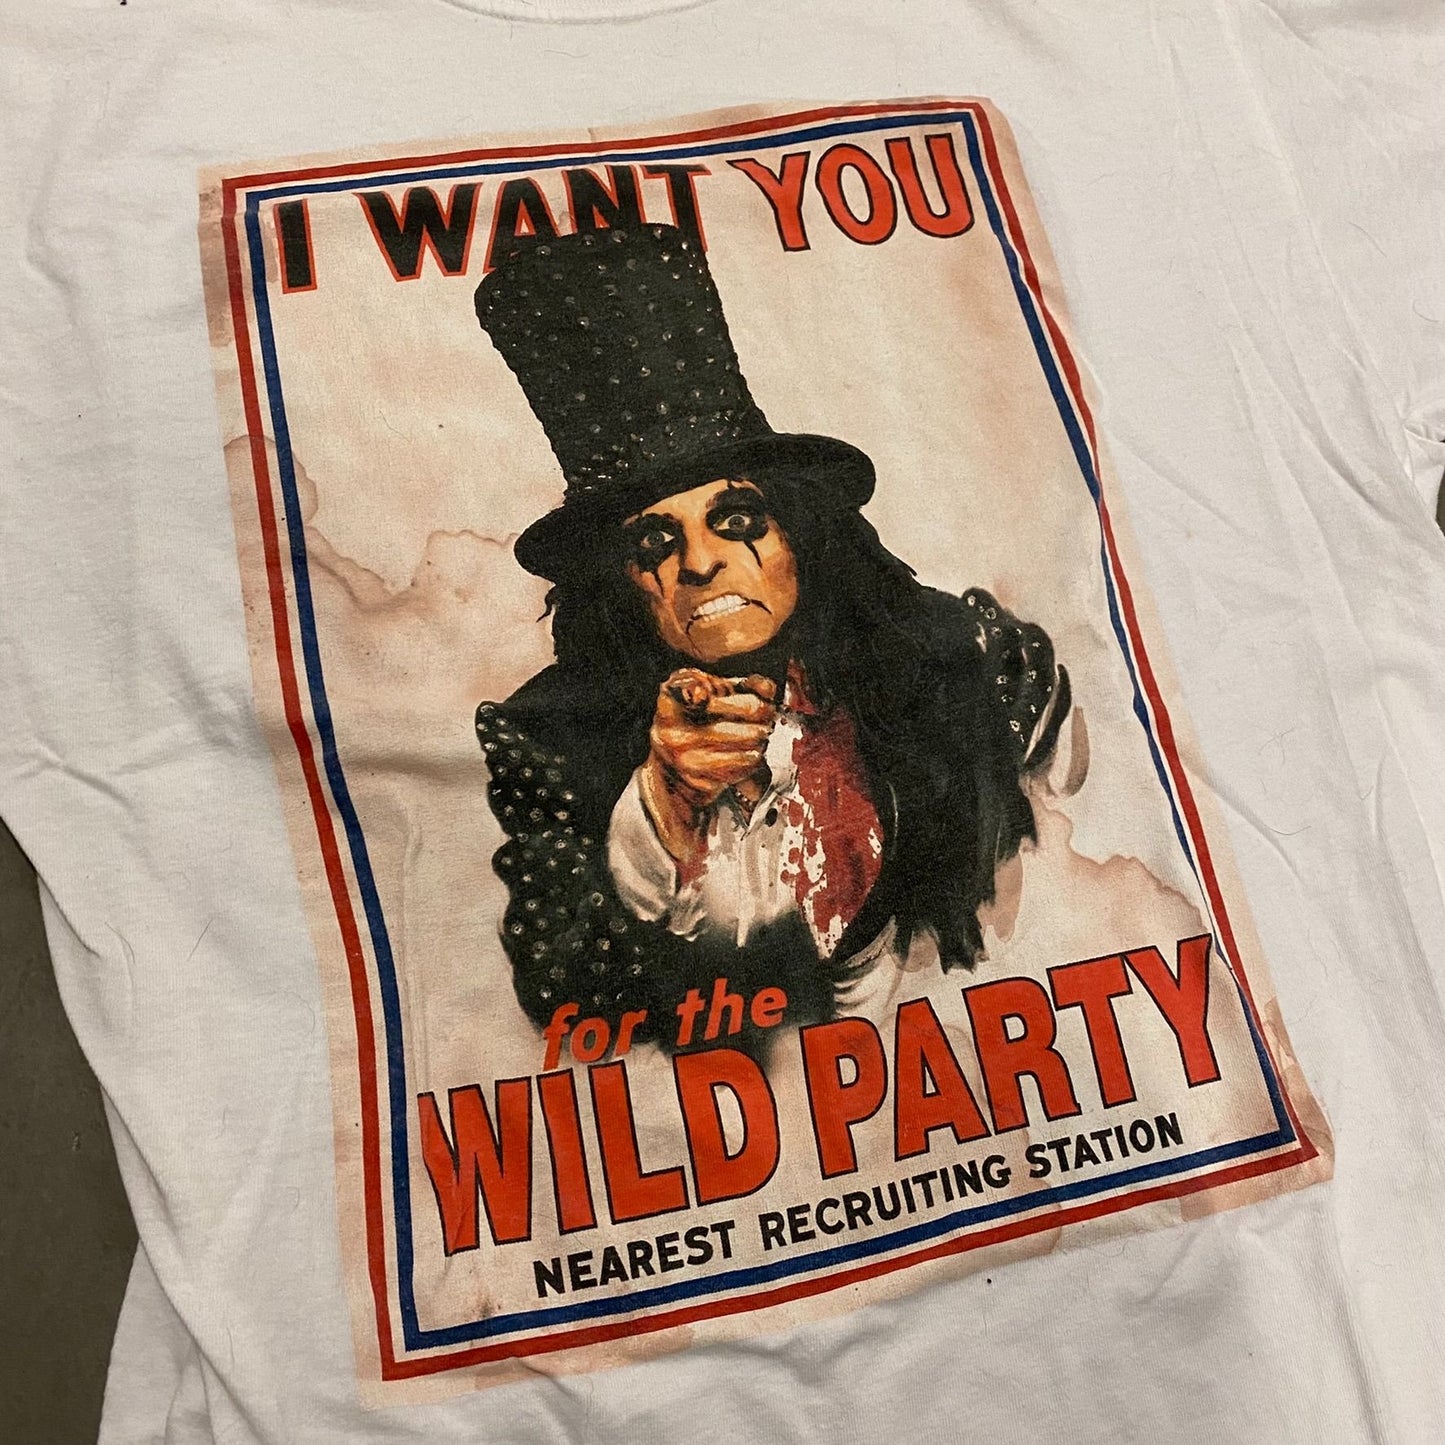 Wild Party Vintage T-Shirt